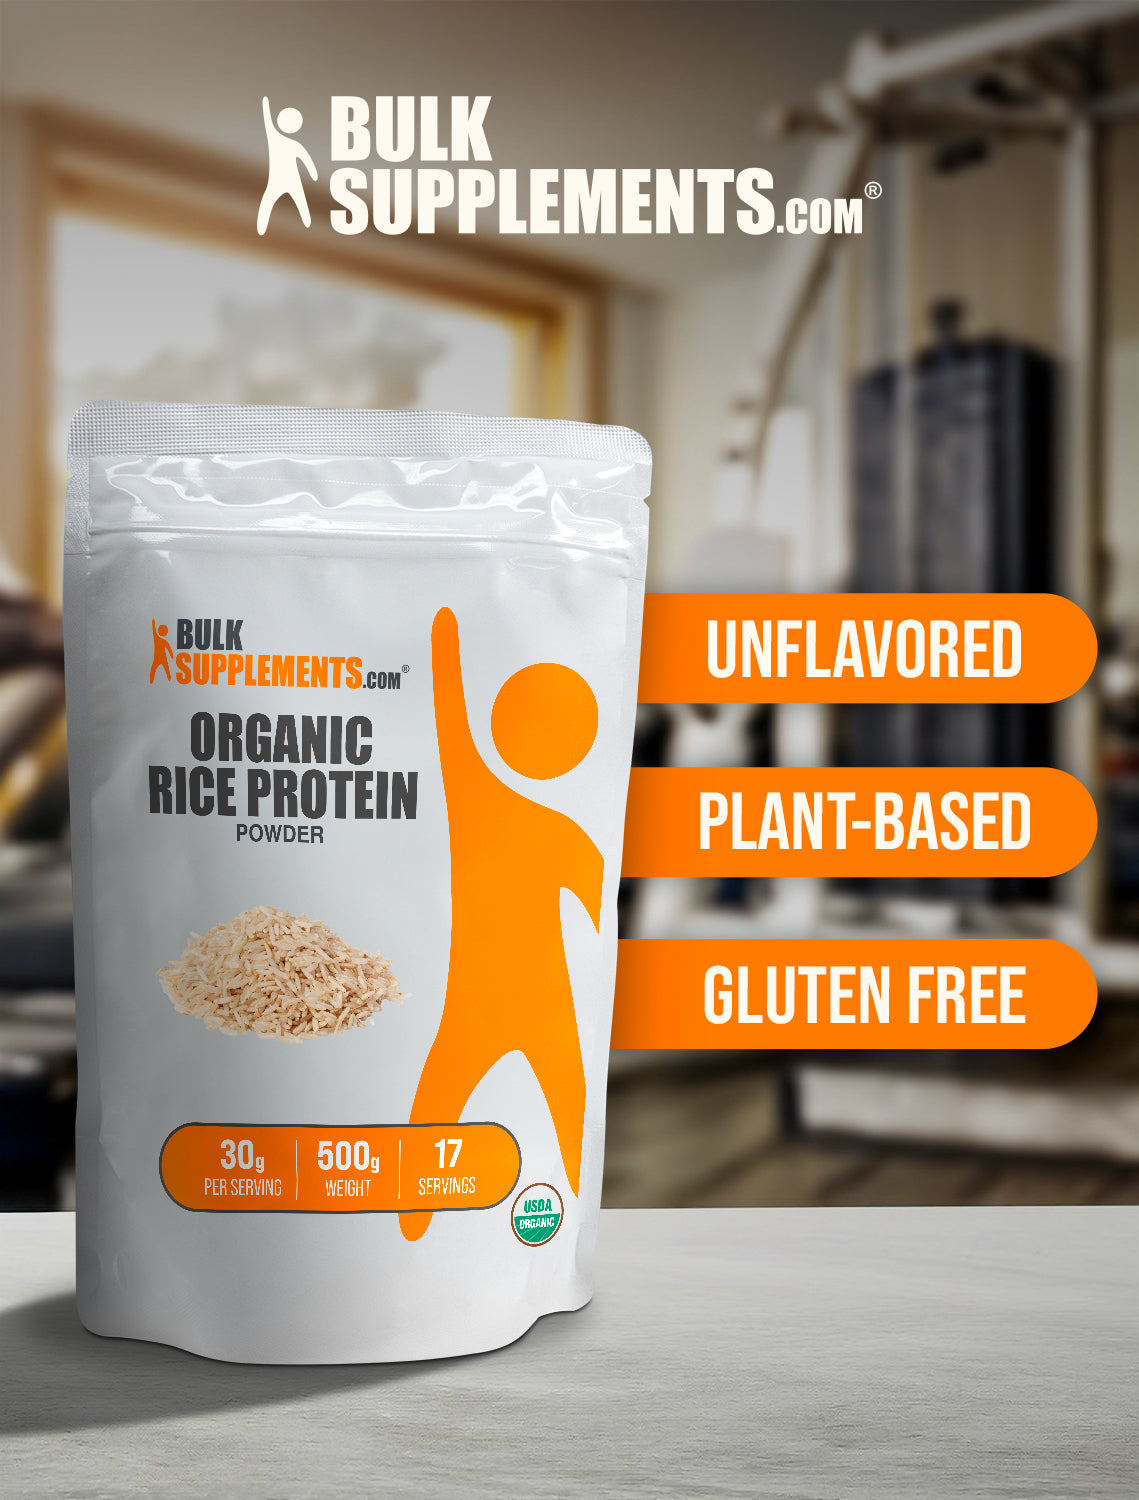 Organic Rice Protein Powder keyword image 500g